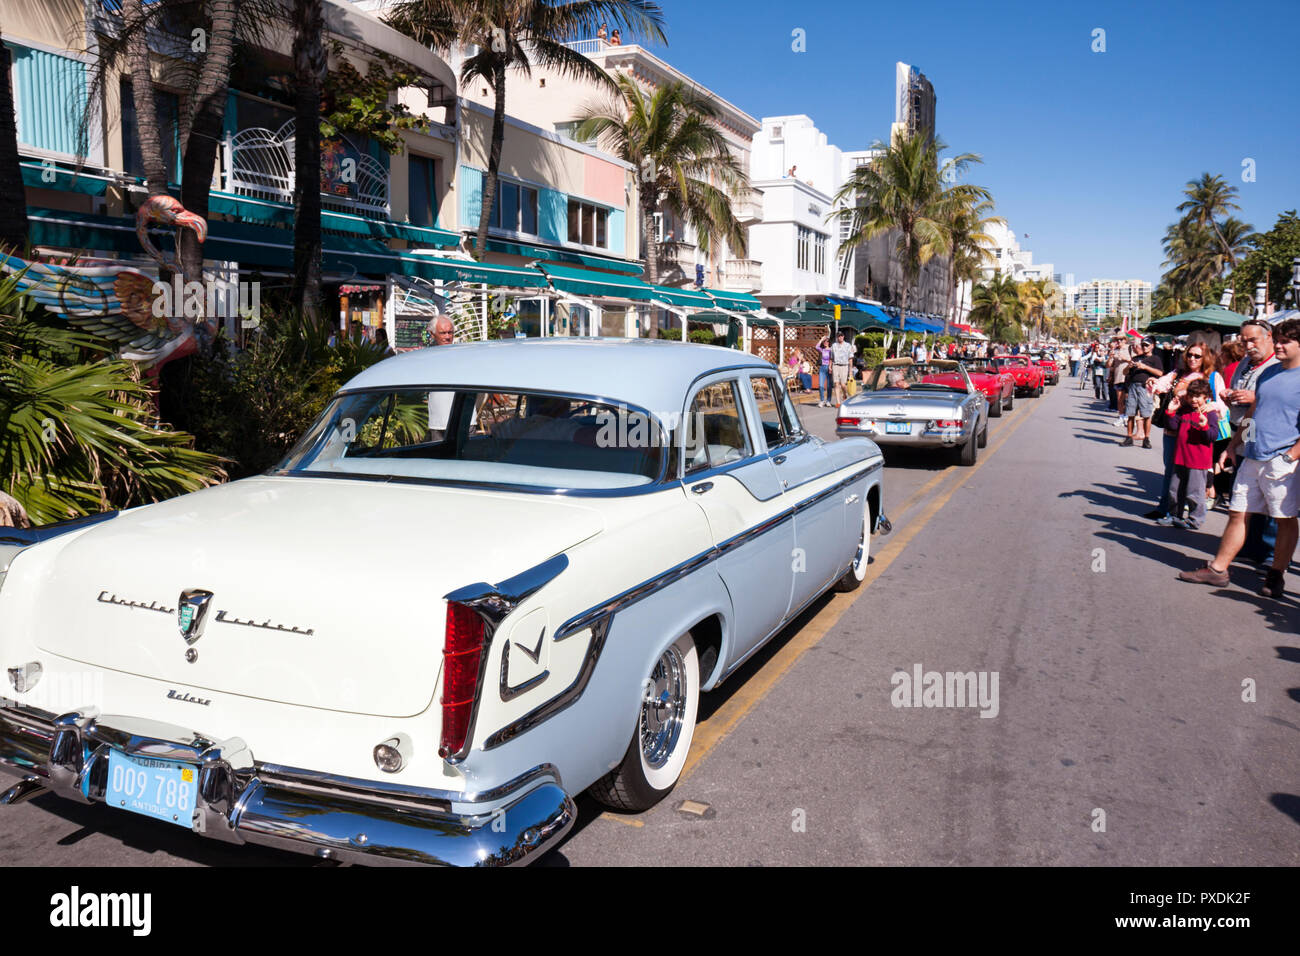 Miami Beach Florida,Ocean Drive,Art Deco Weekend,architecture festival parade,crowd,classic car,vintage,entertainment,Chrysler Windsor Deluxe,FL090119 Stock Photo